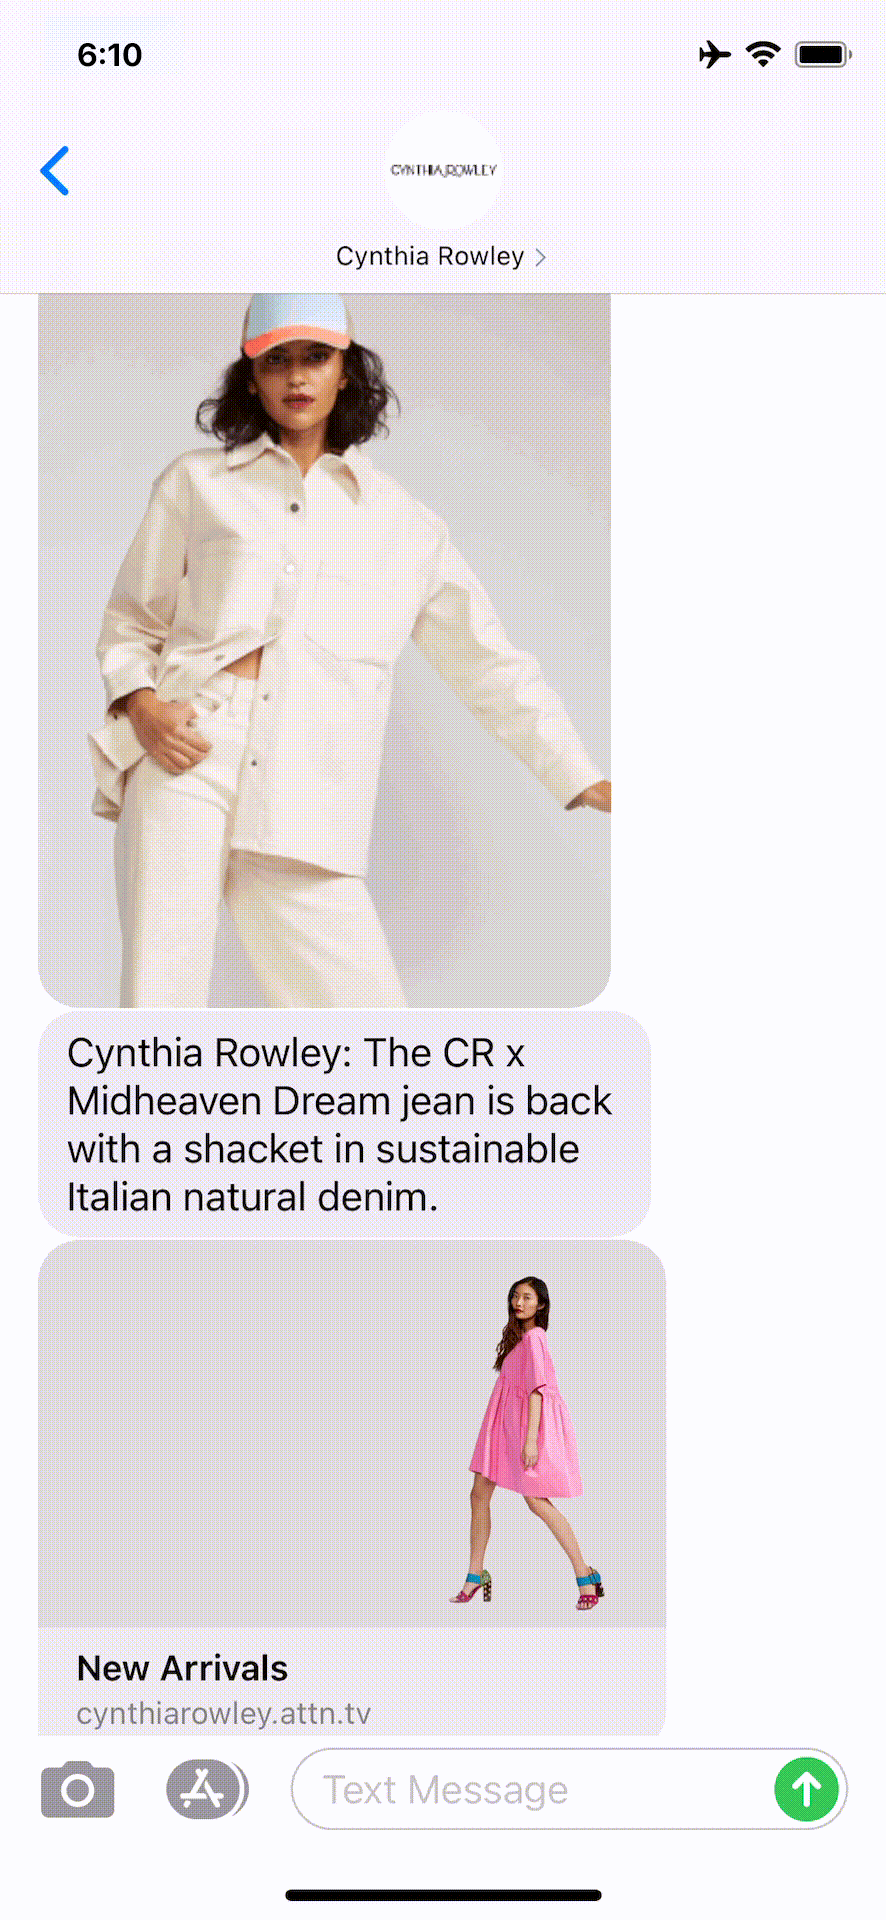 Cynthia-Rowley-Text-Message-Marketing-Example-05.23.2021